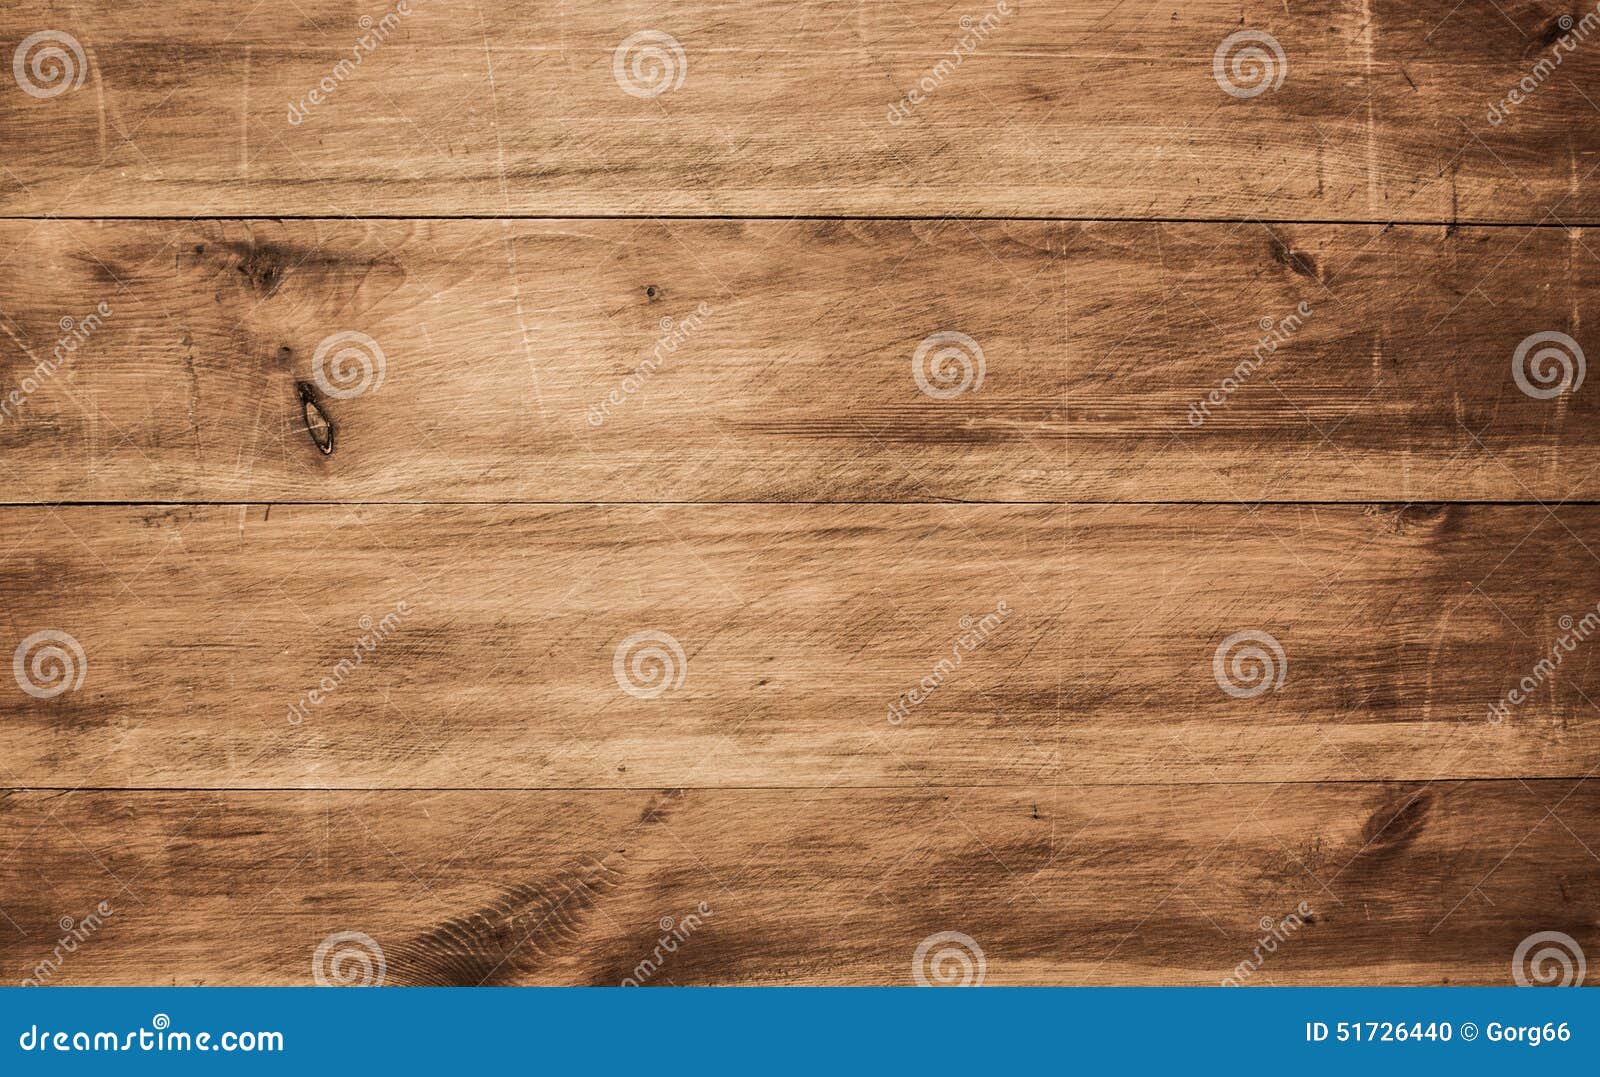 wooden texture, brown wood background